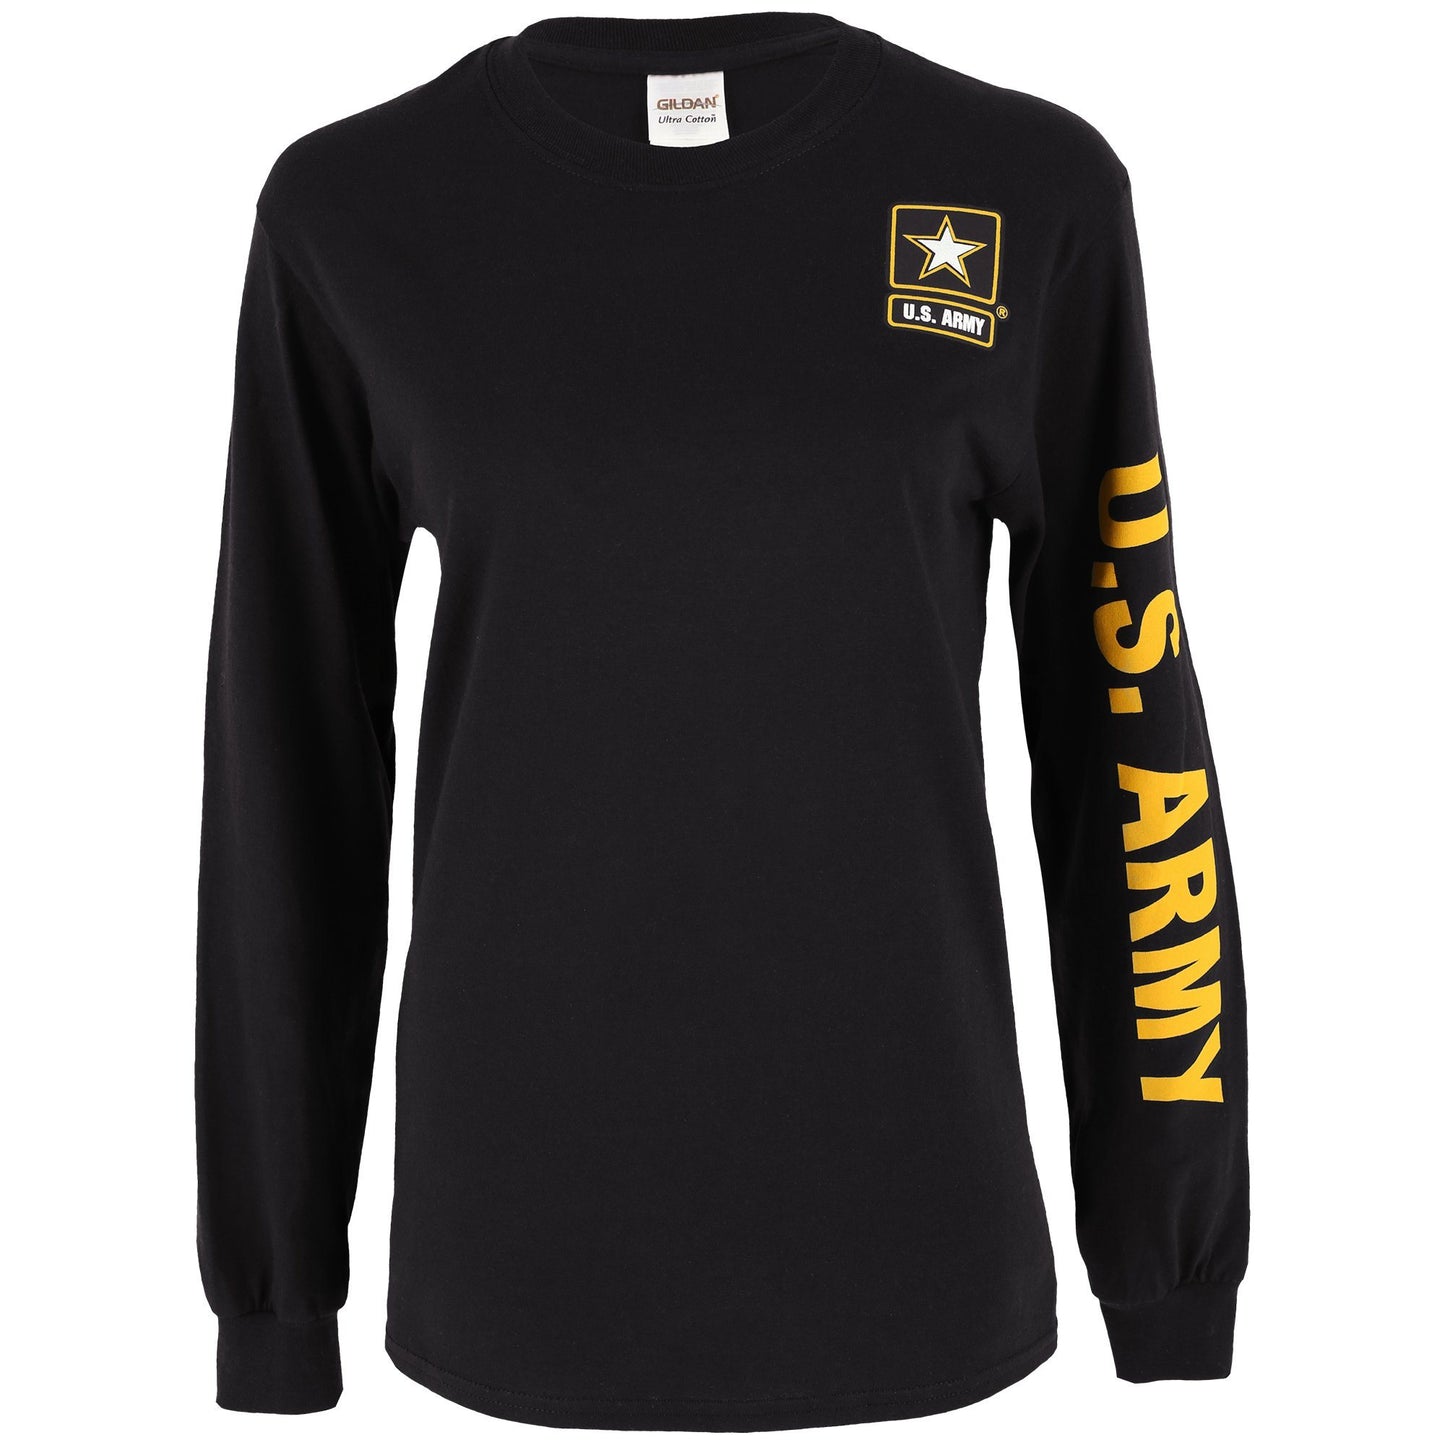 U.S. Army Long Sleeve T-Shirt